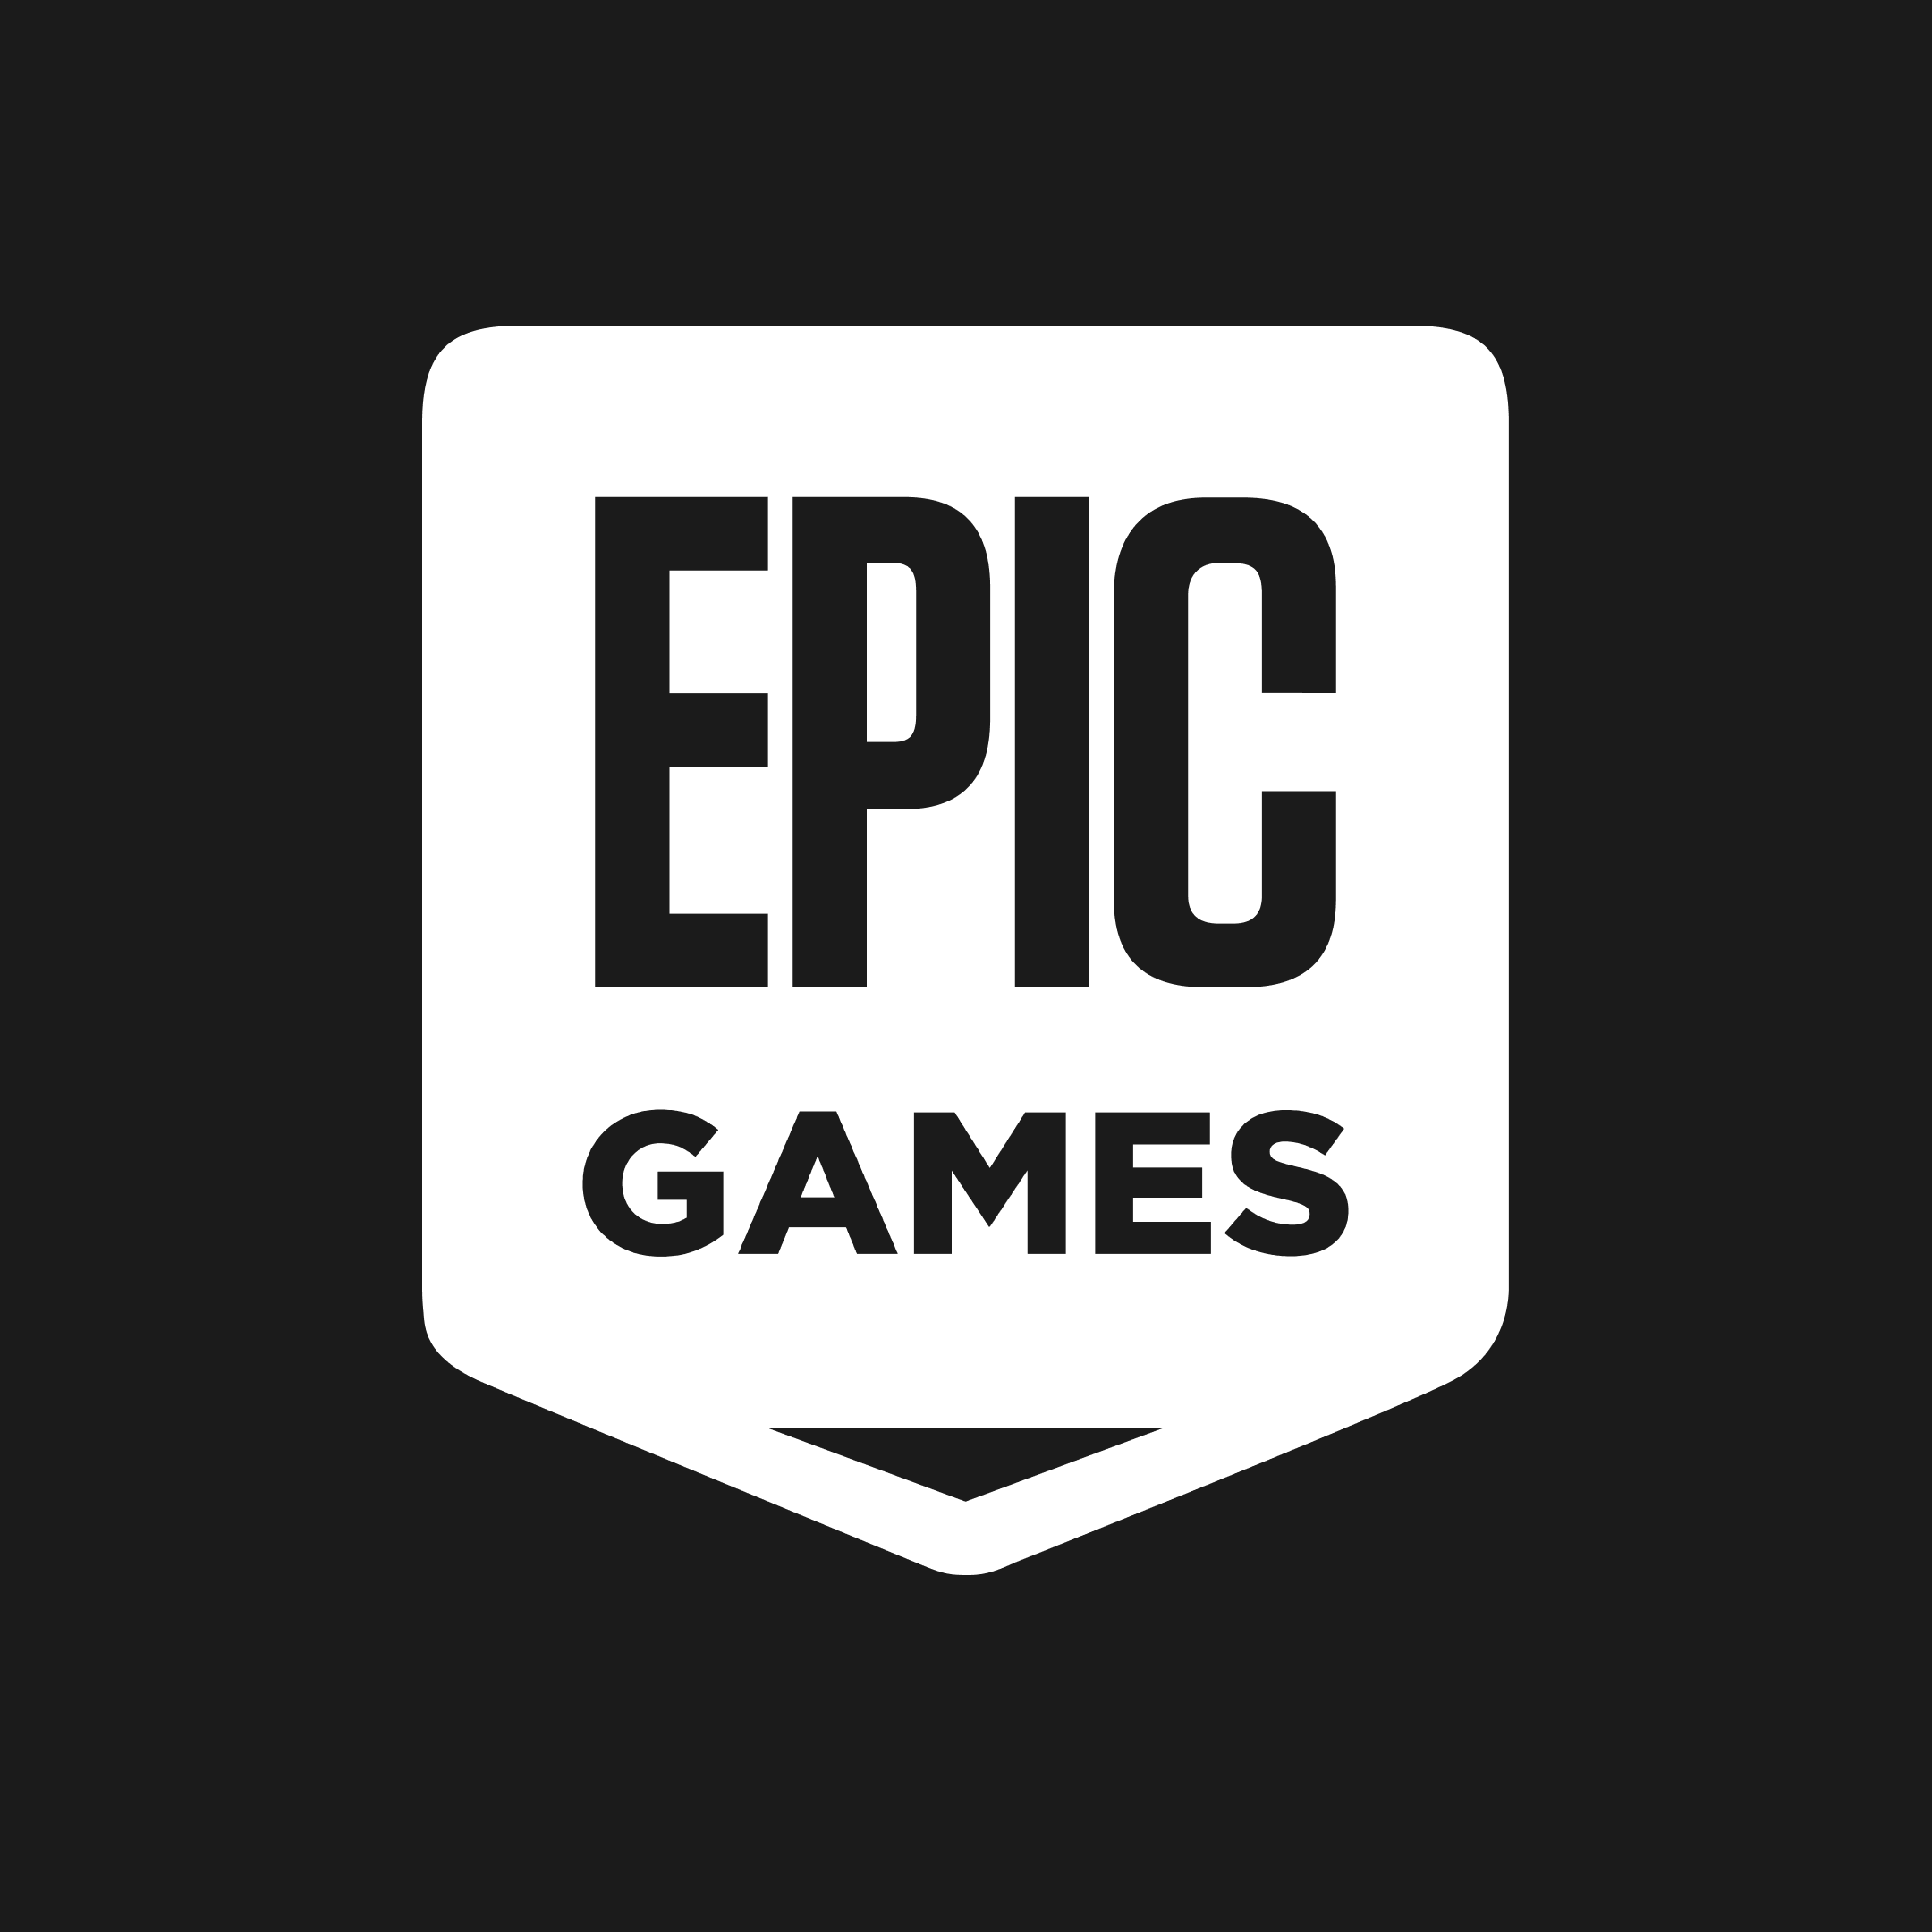 Epic gays. Epic games. ЭПИК геймс ава.